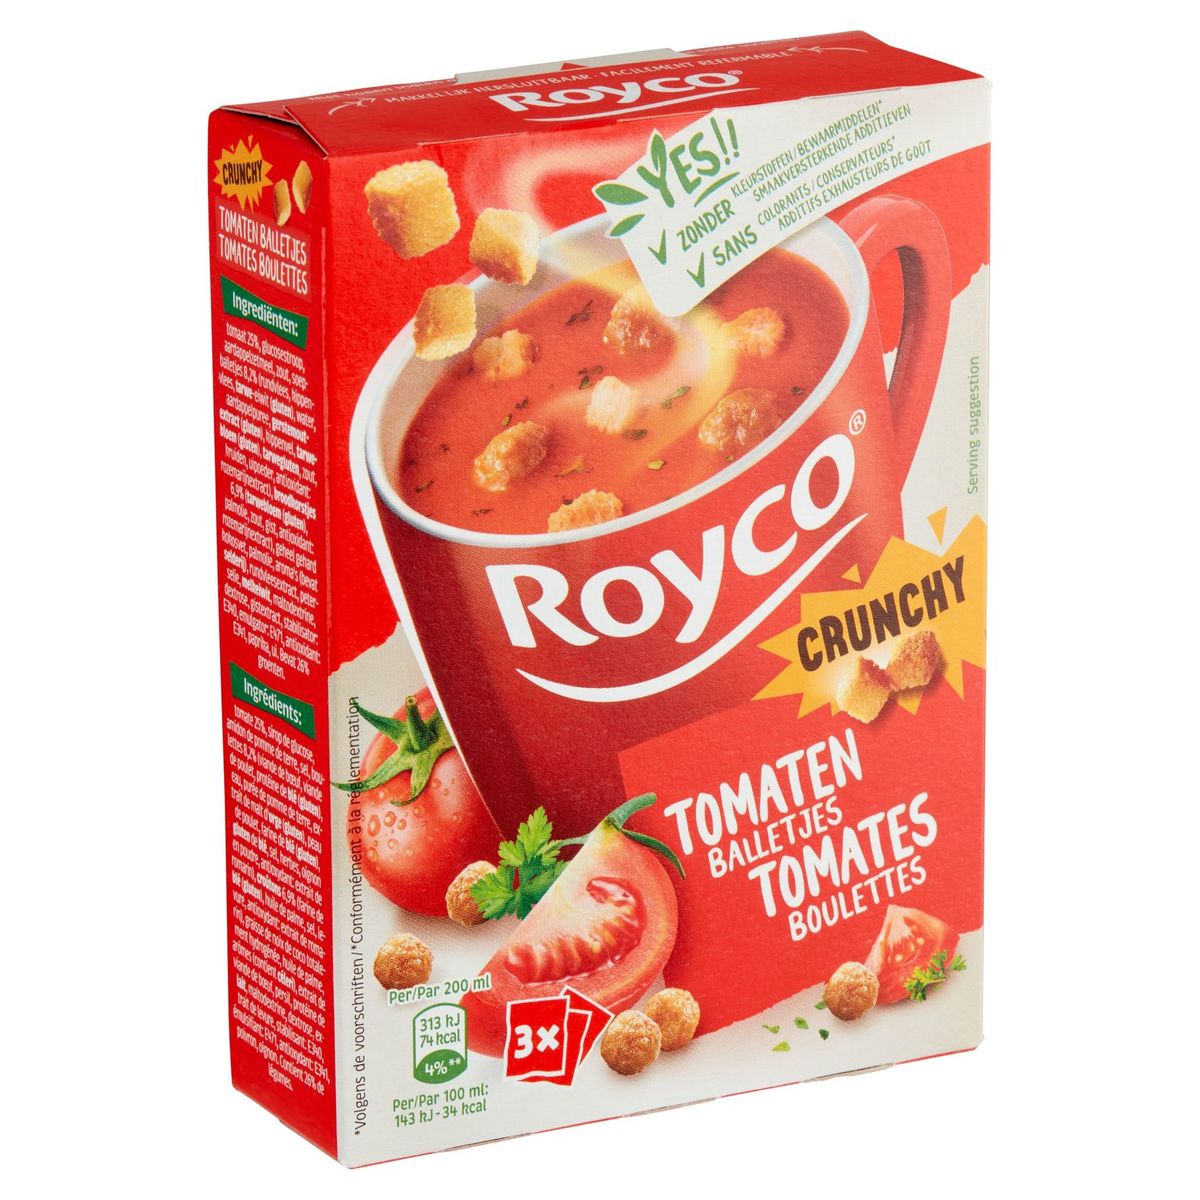 Royco Crunchy Tomates Boulettes 3 x 18 g